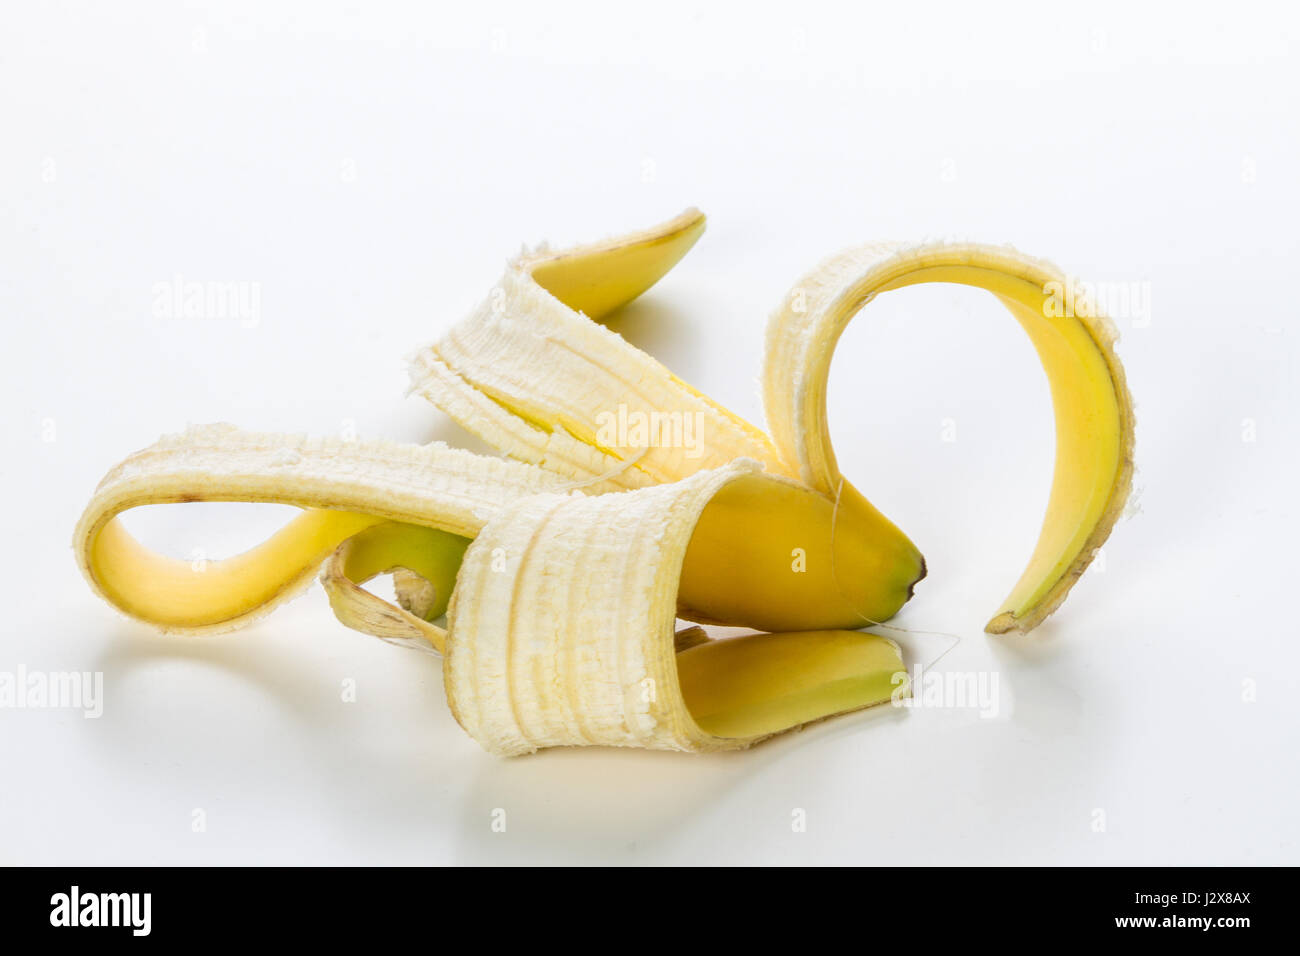 Fresh yellow banana on white background Stock Photo